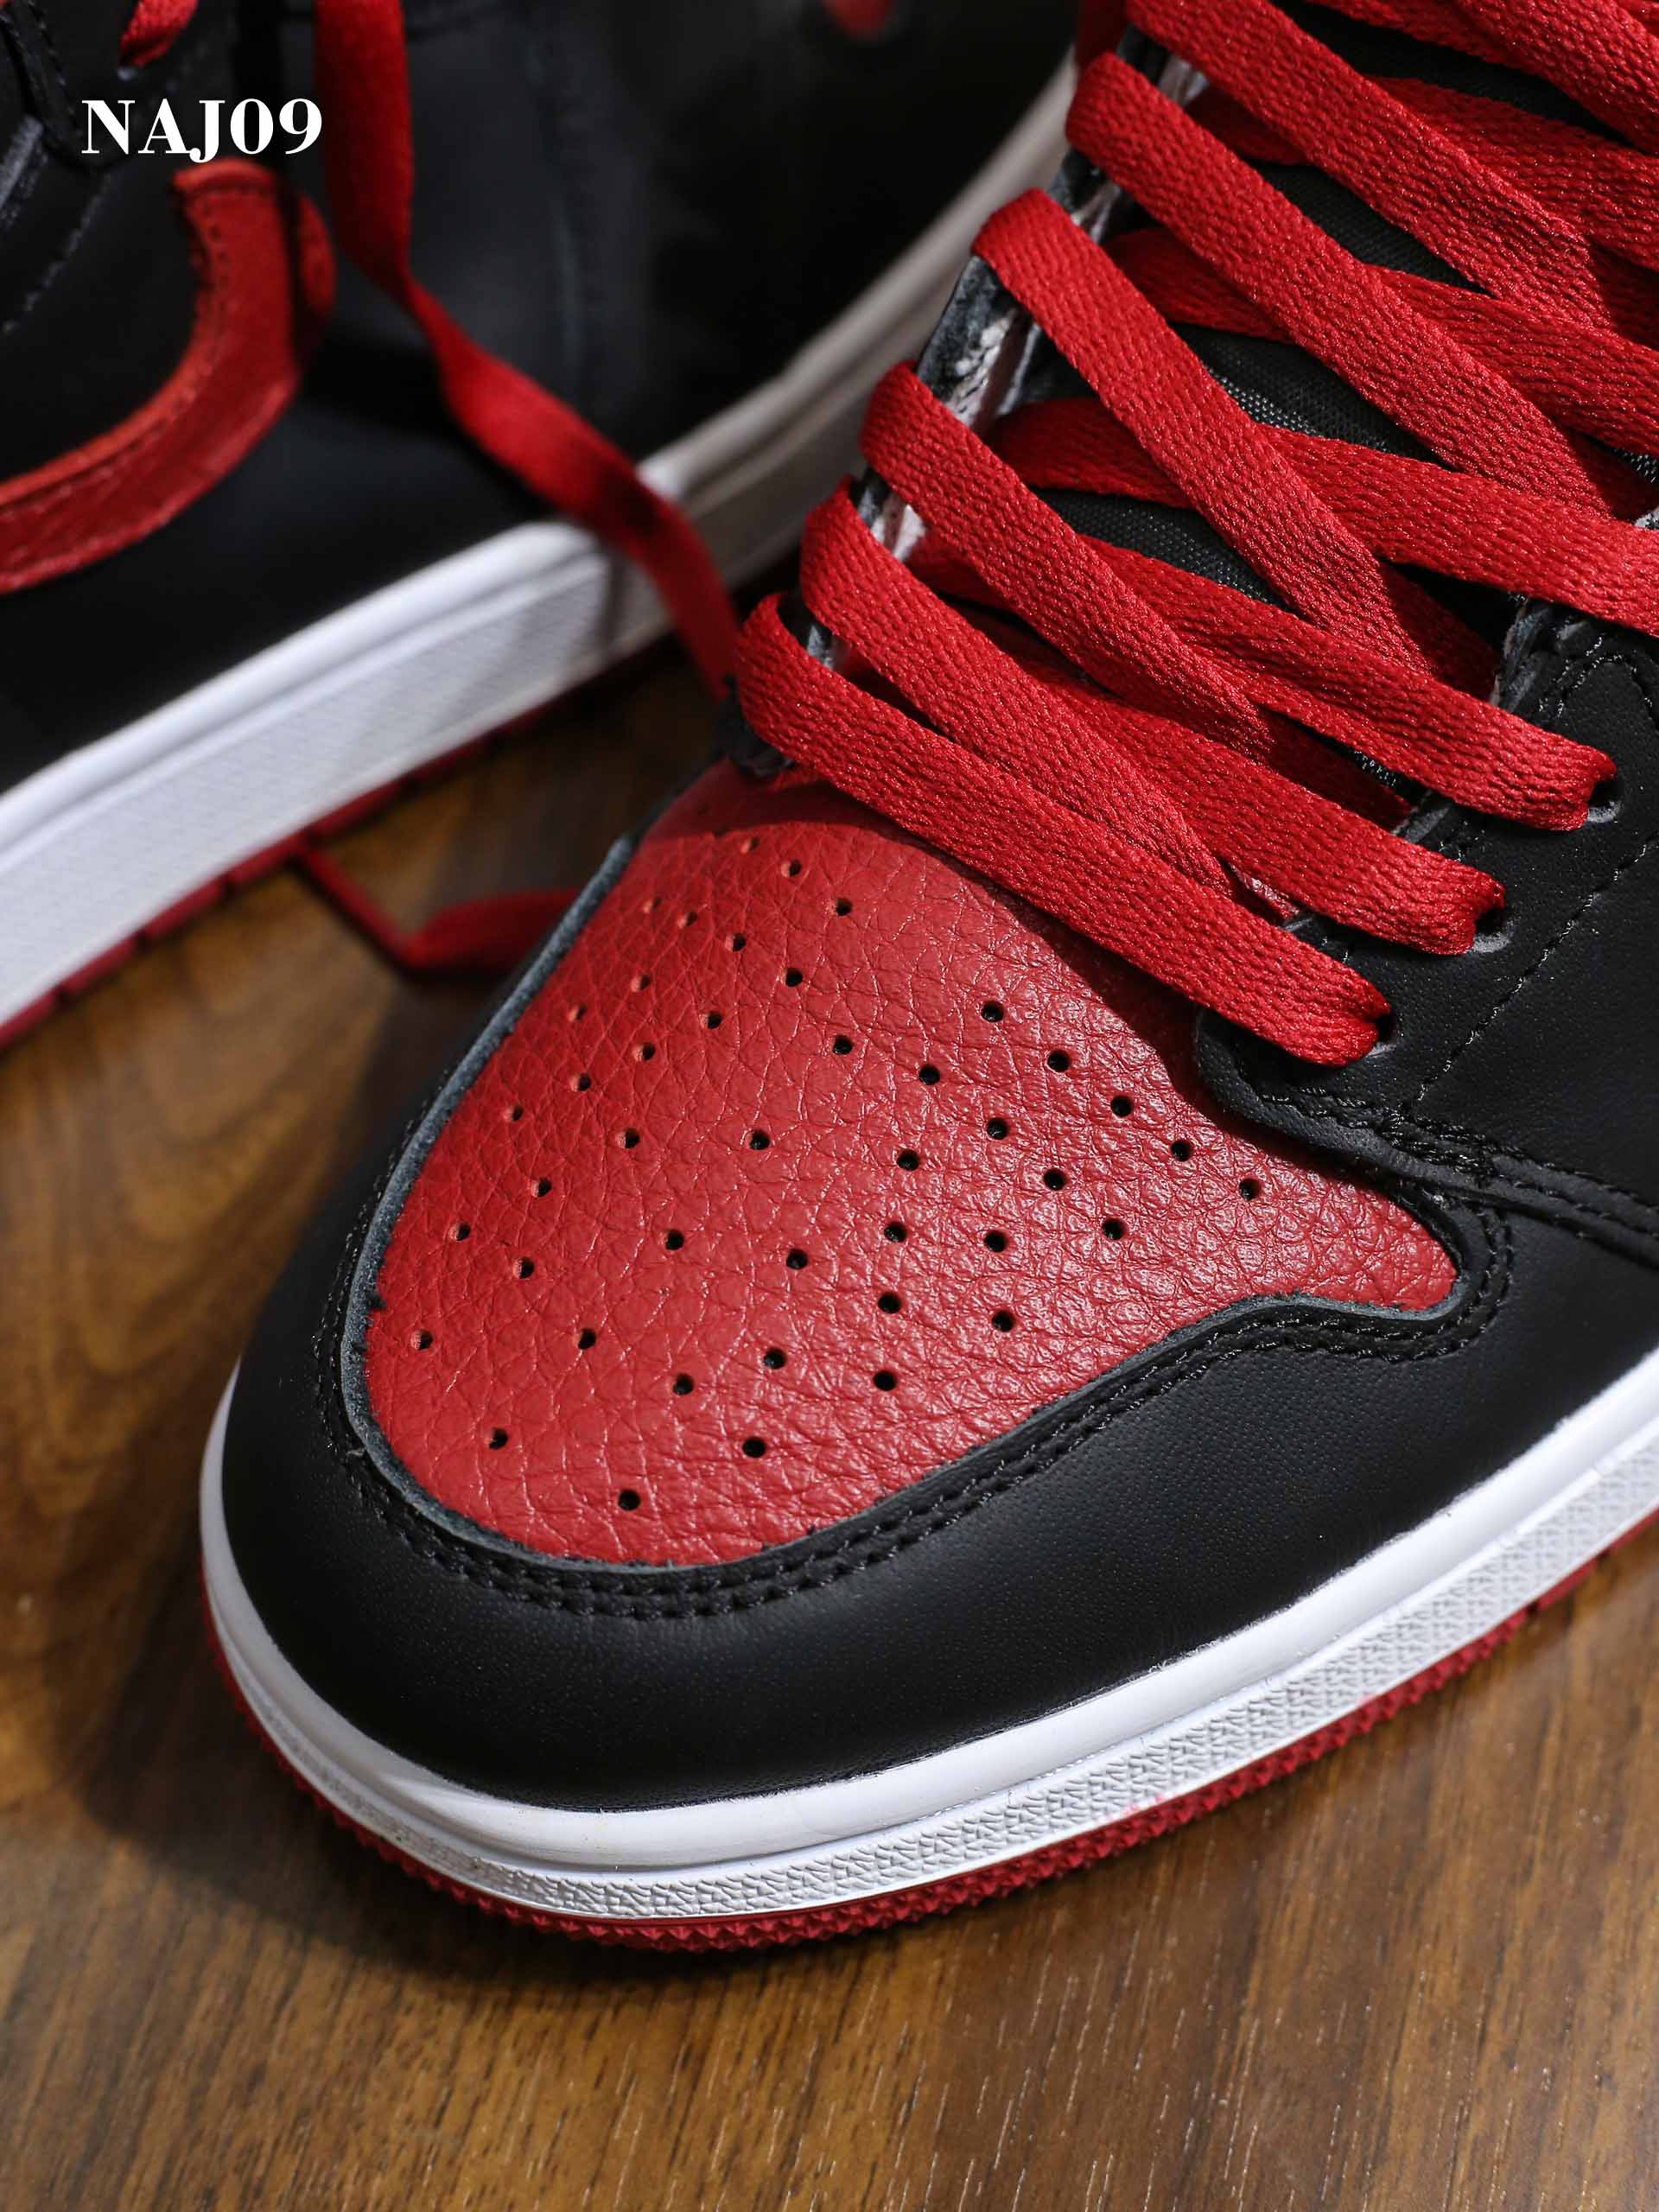 Giày Nike Air Jordan 1 Retro High Og ‘Bred’ đen đỏ rep 1:1